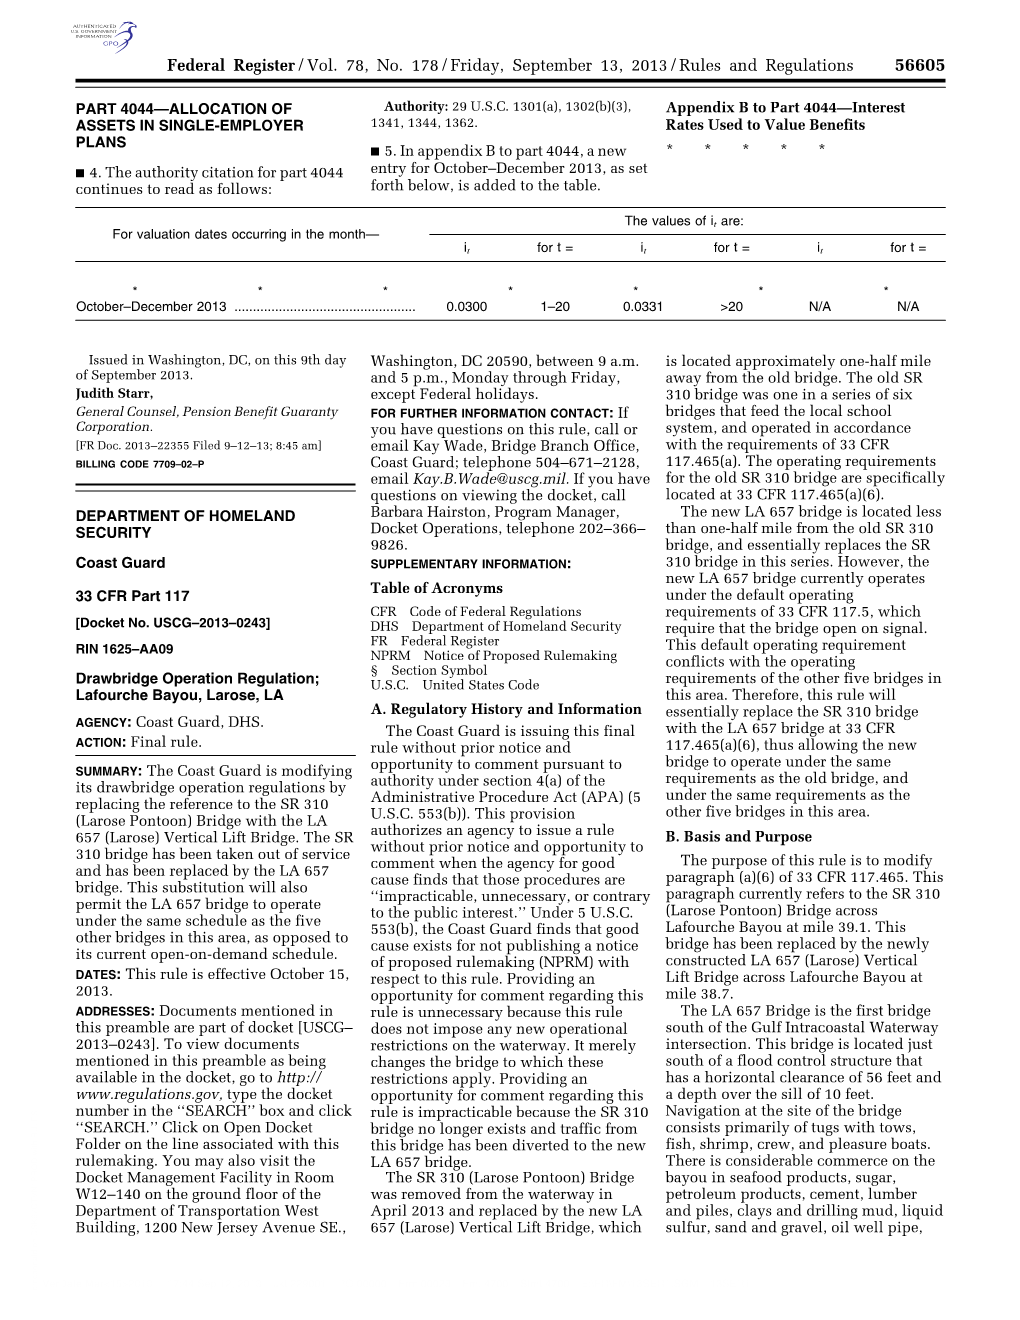 Federal Register/Vol. 78, No. 178/Friday, September 13, 2013/Rules